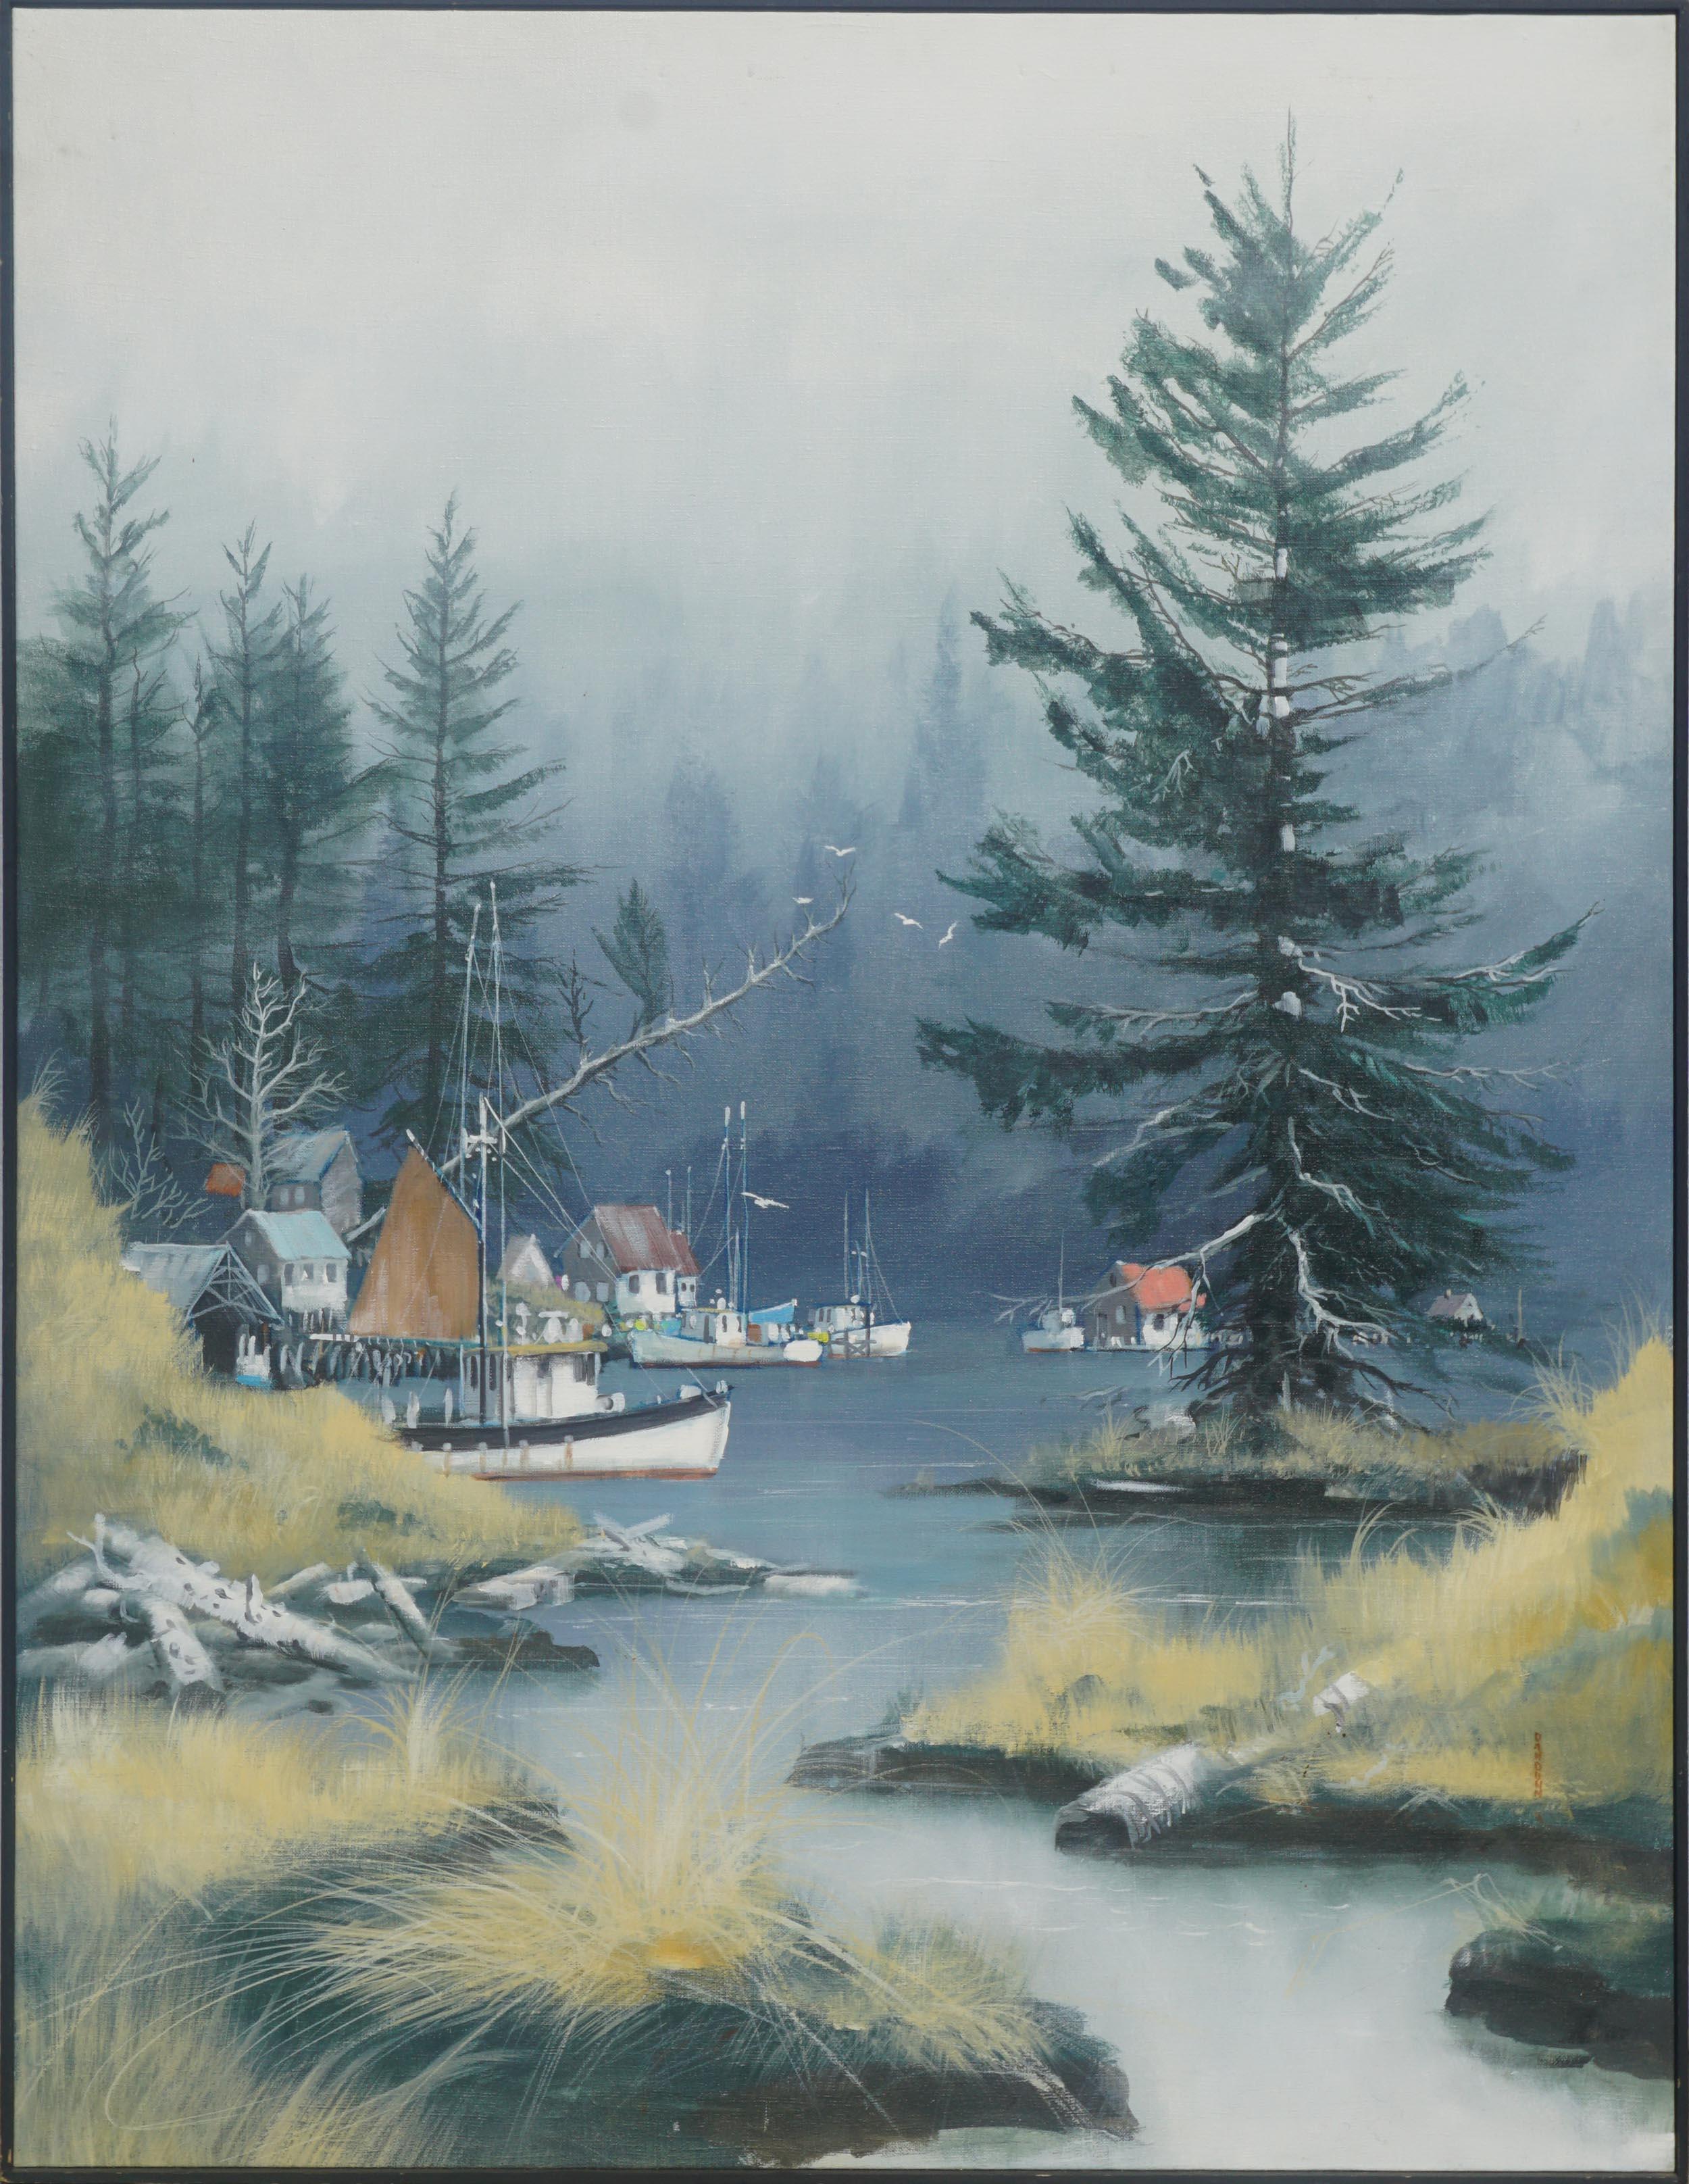 Dan Dunn Landscape Painting - Large Scale Alaska Fishing Village Landscape